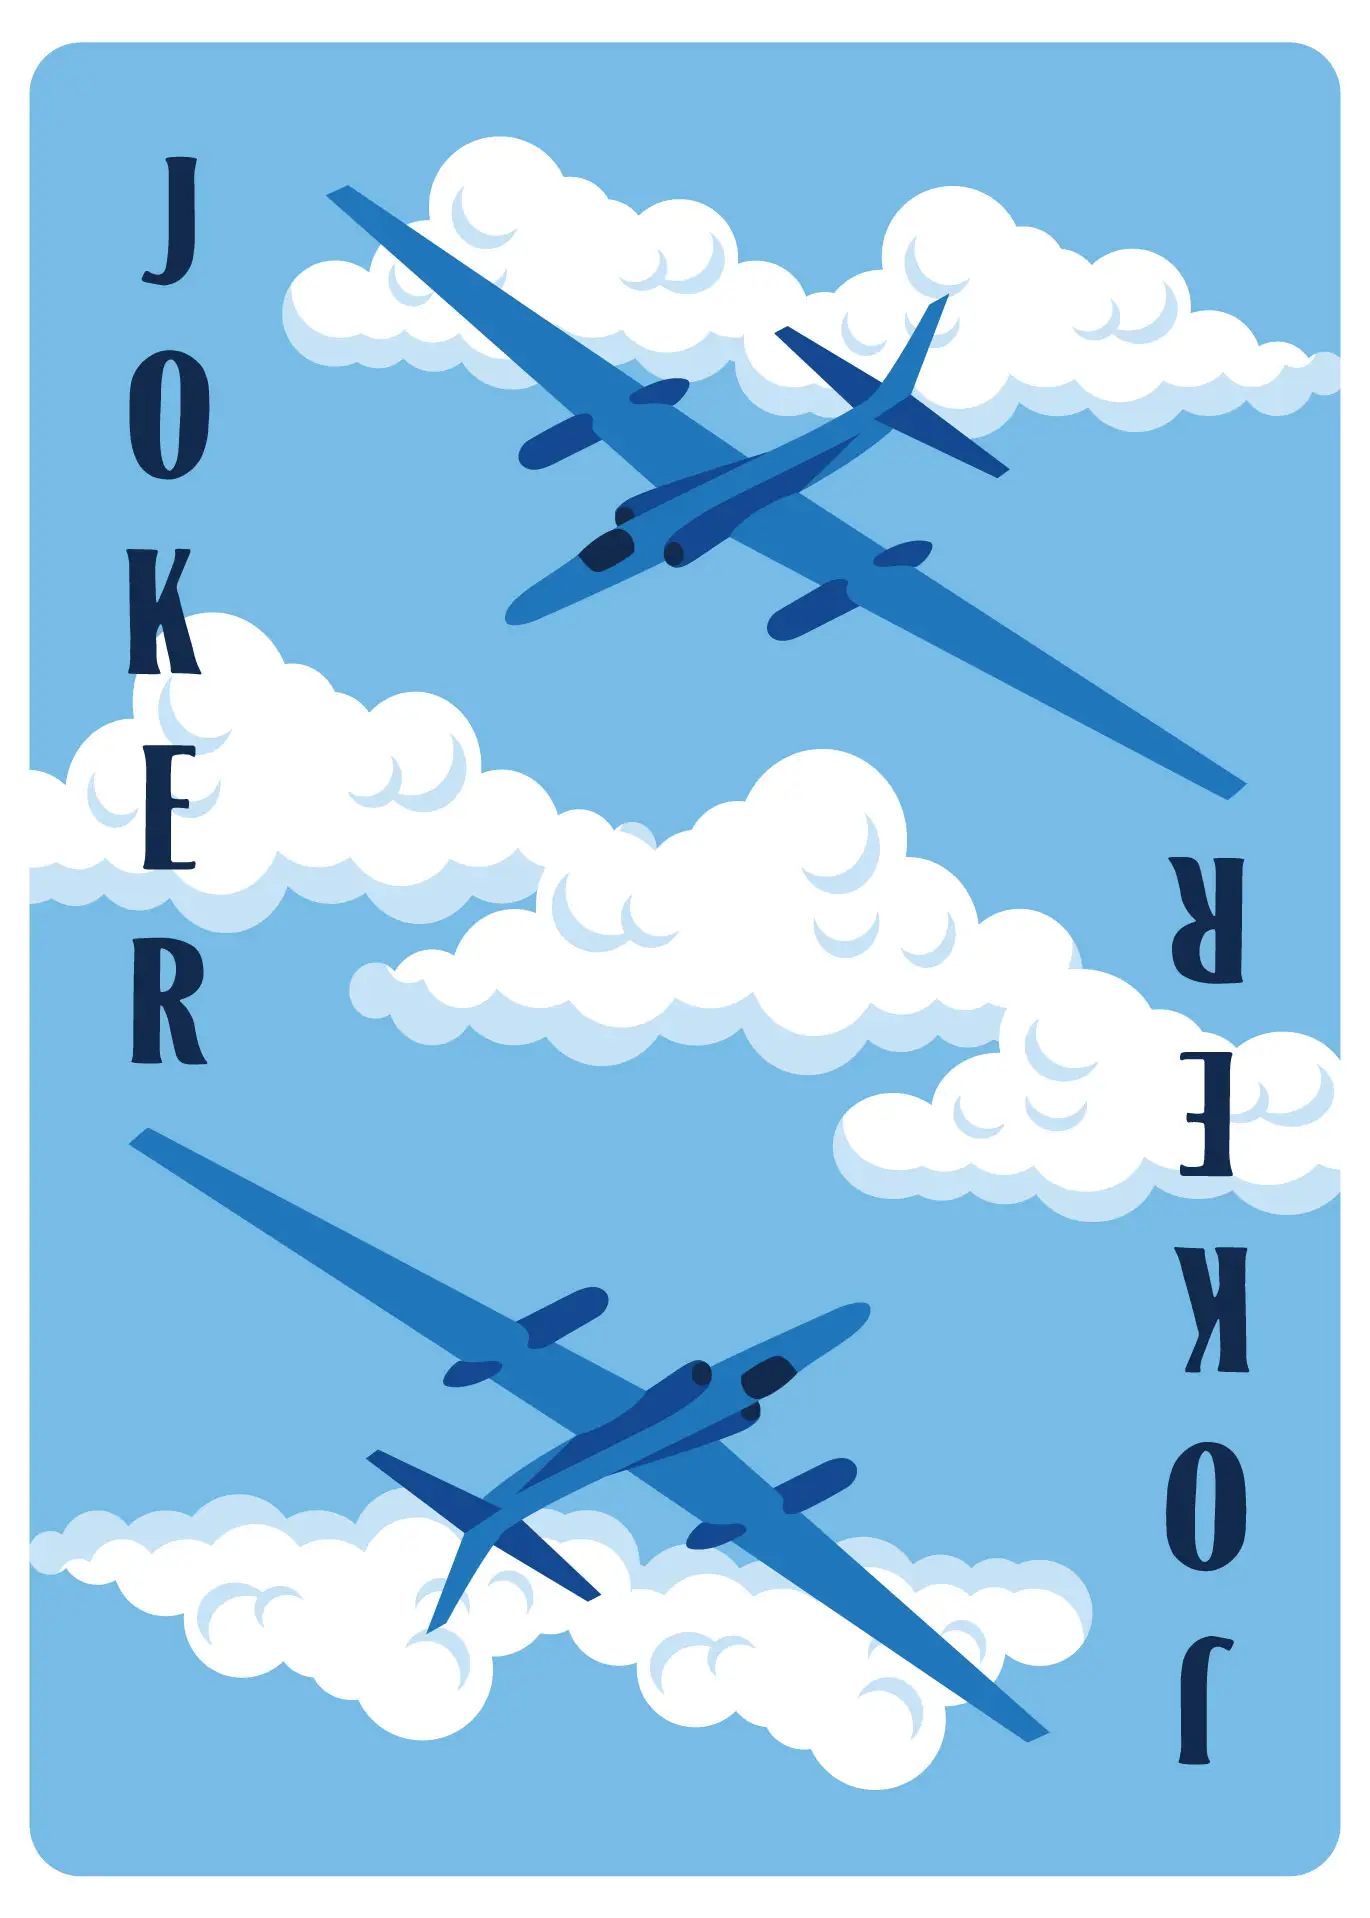 joker-spy-plane-4.jpg